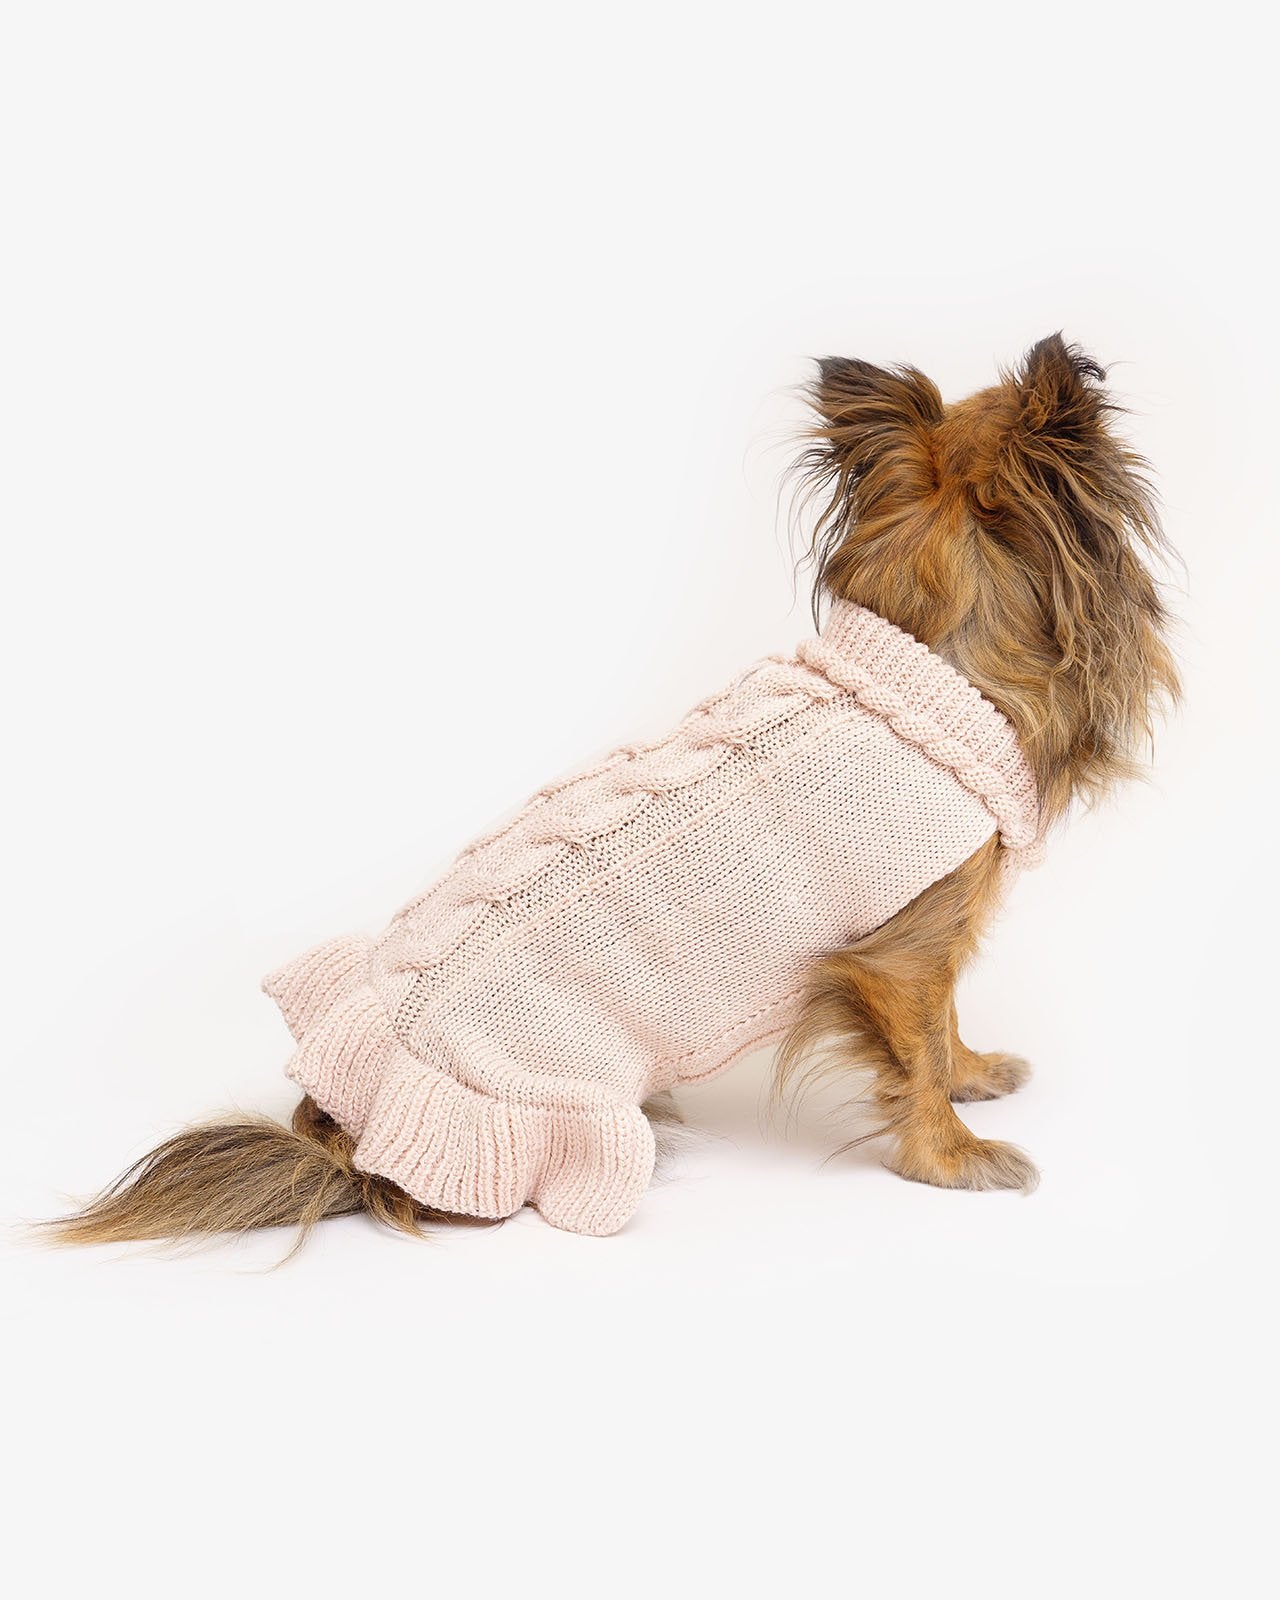 dog's wool light pink sweater